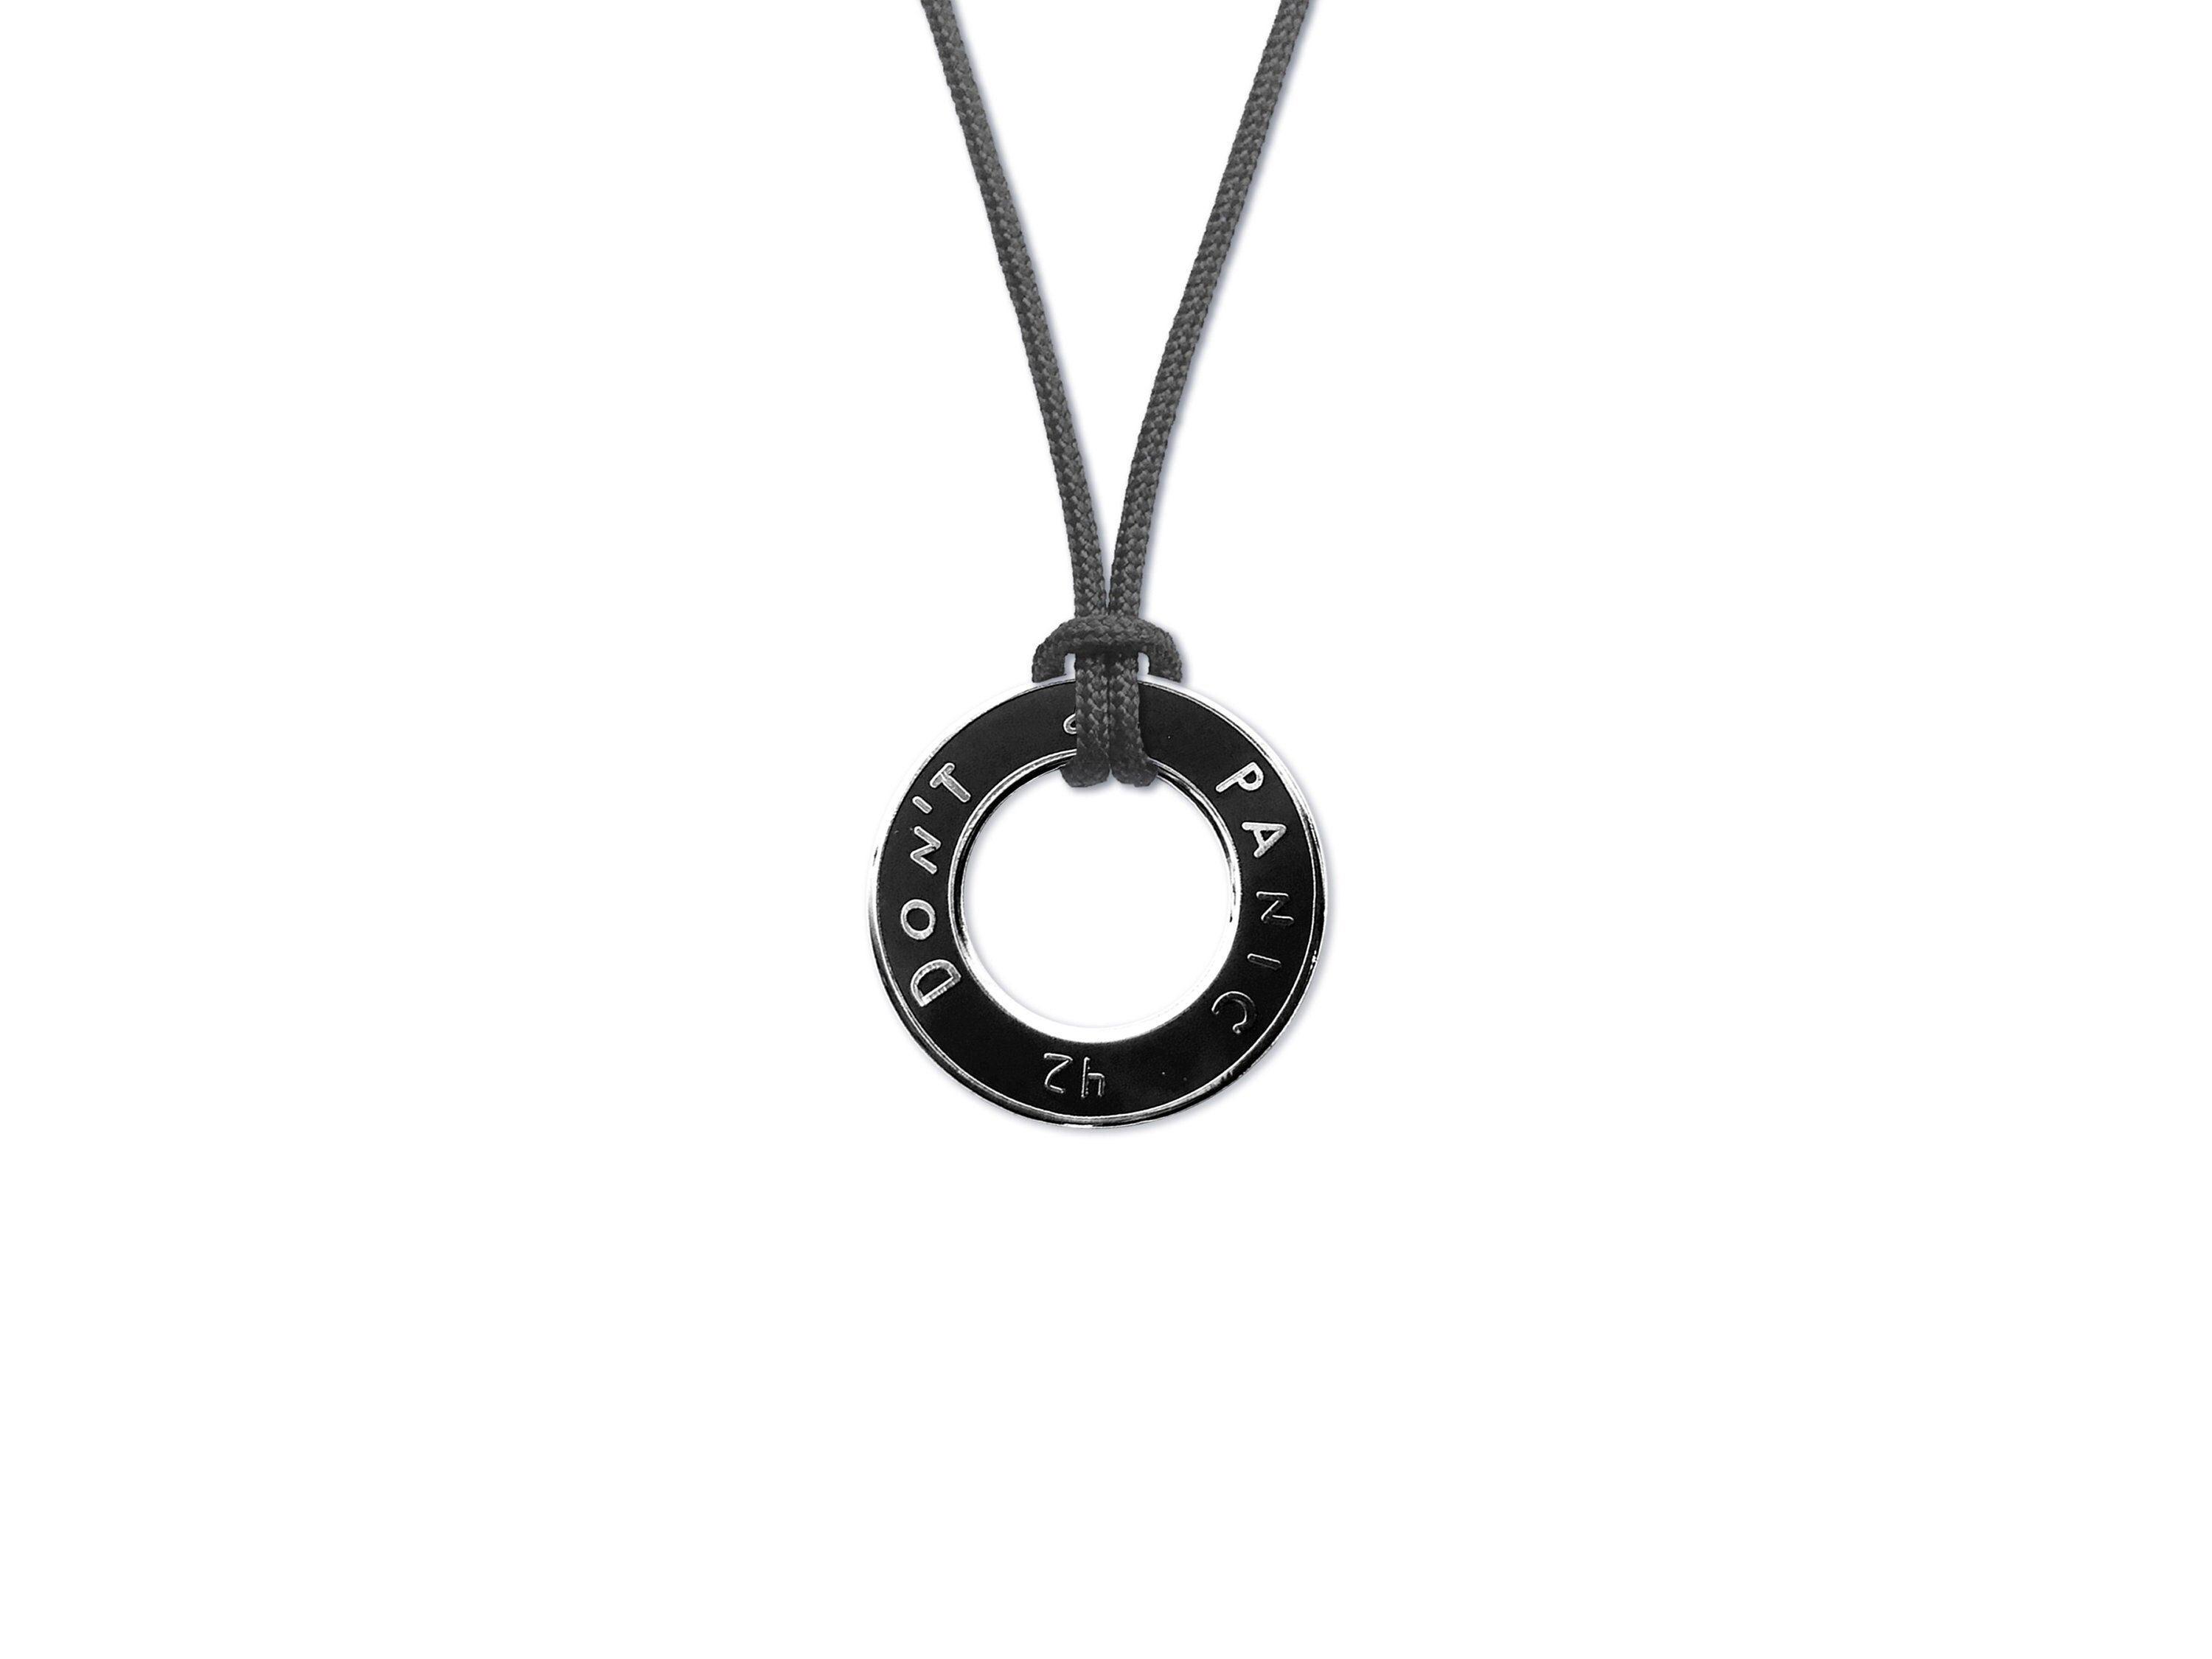 Hitchhikers Guide Don't Panic Necklace- HHGTTG Men's/Women's Astronomy Pendant / Jewelry - Douglas Adams Fan Gift